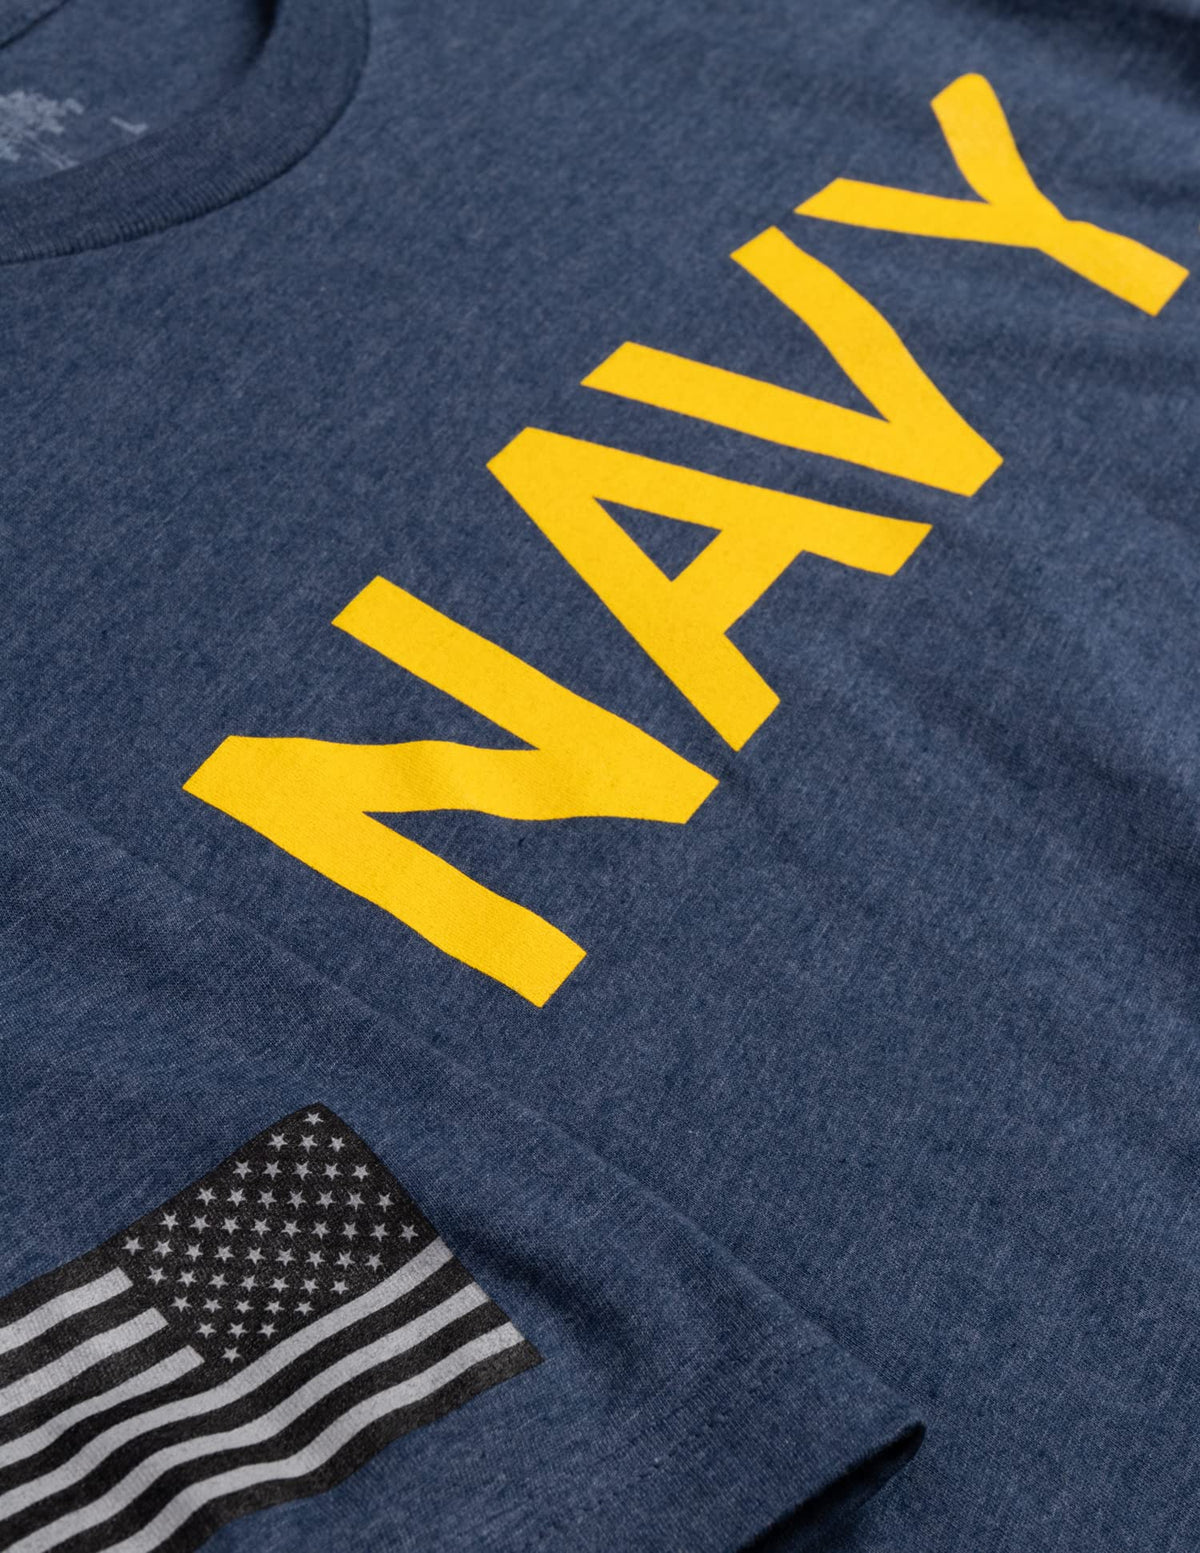 USS Miguel Keith, ESB-5 | U.S. Navy Sailor Veteran USN United States Naval T-shirt for Men Women